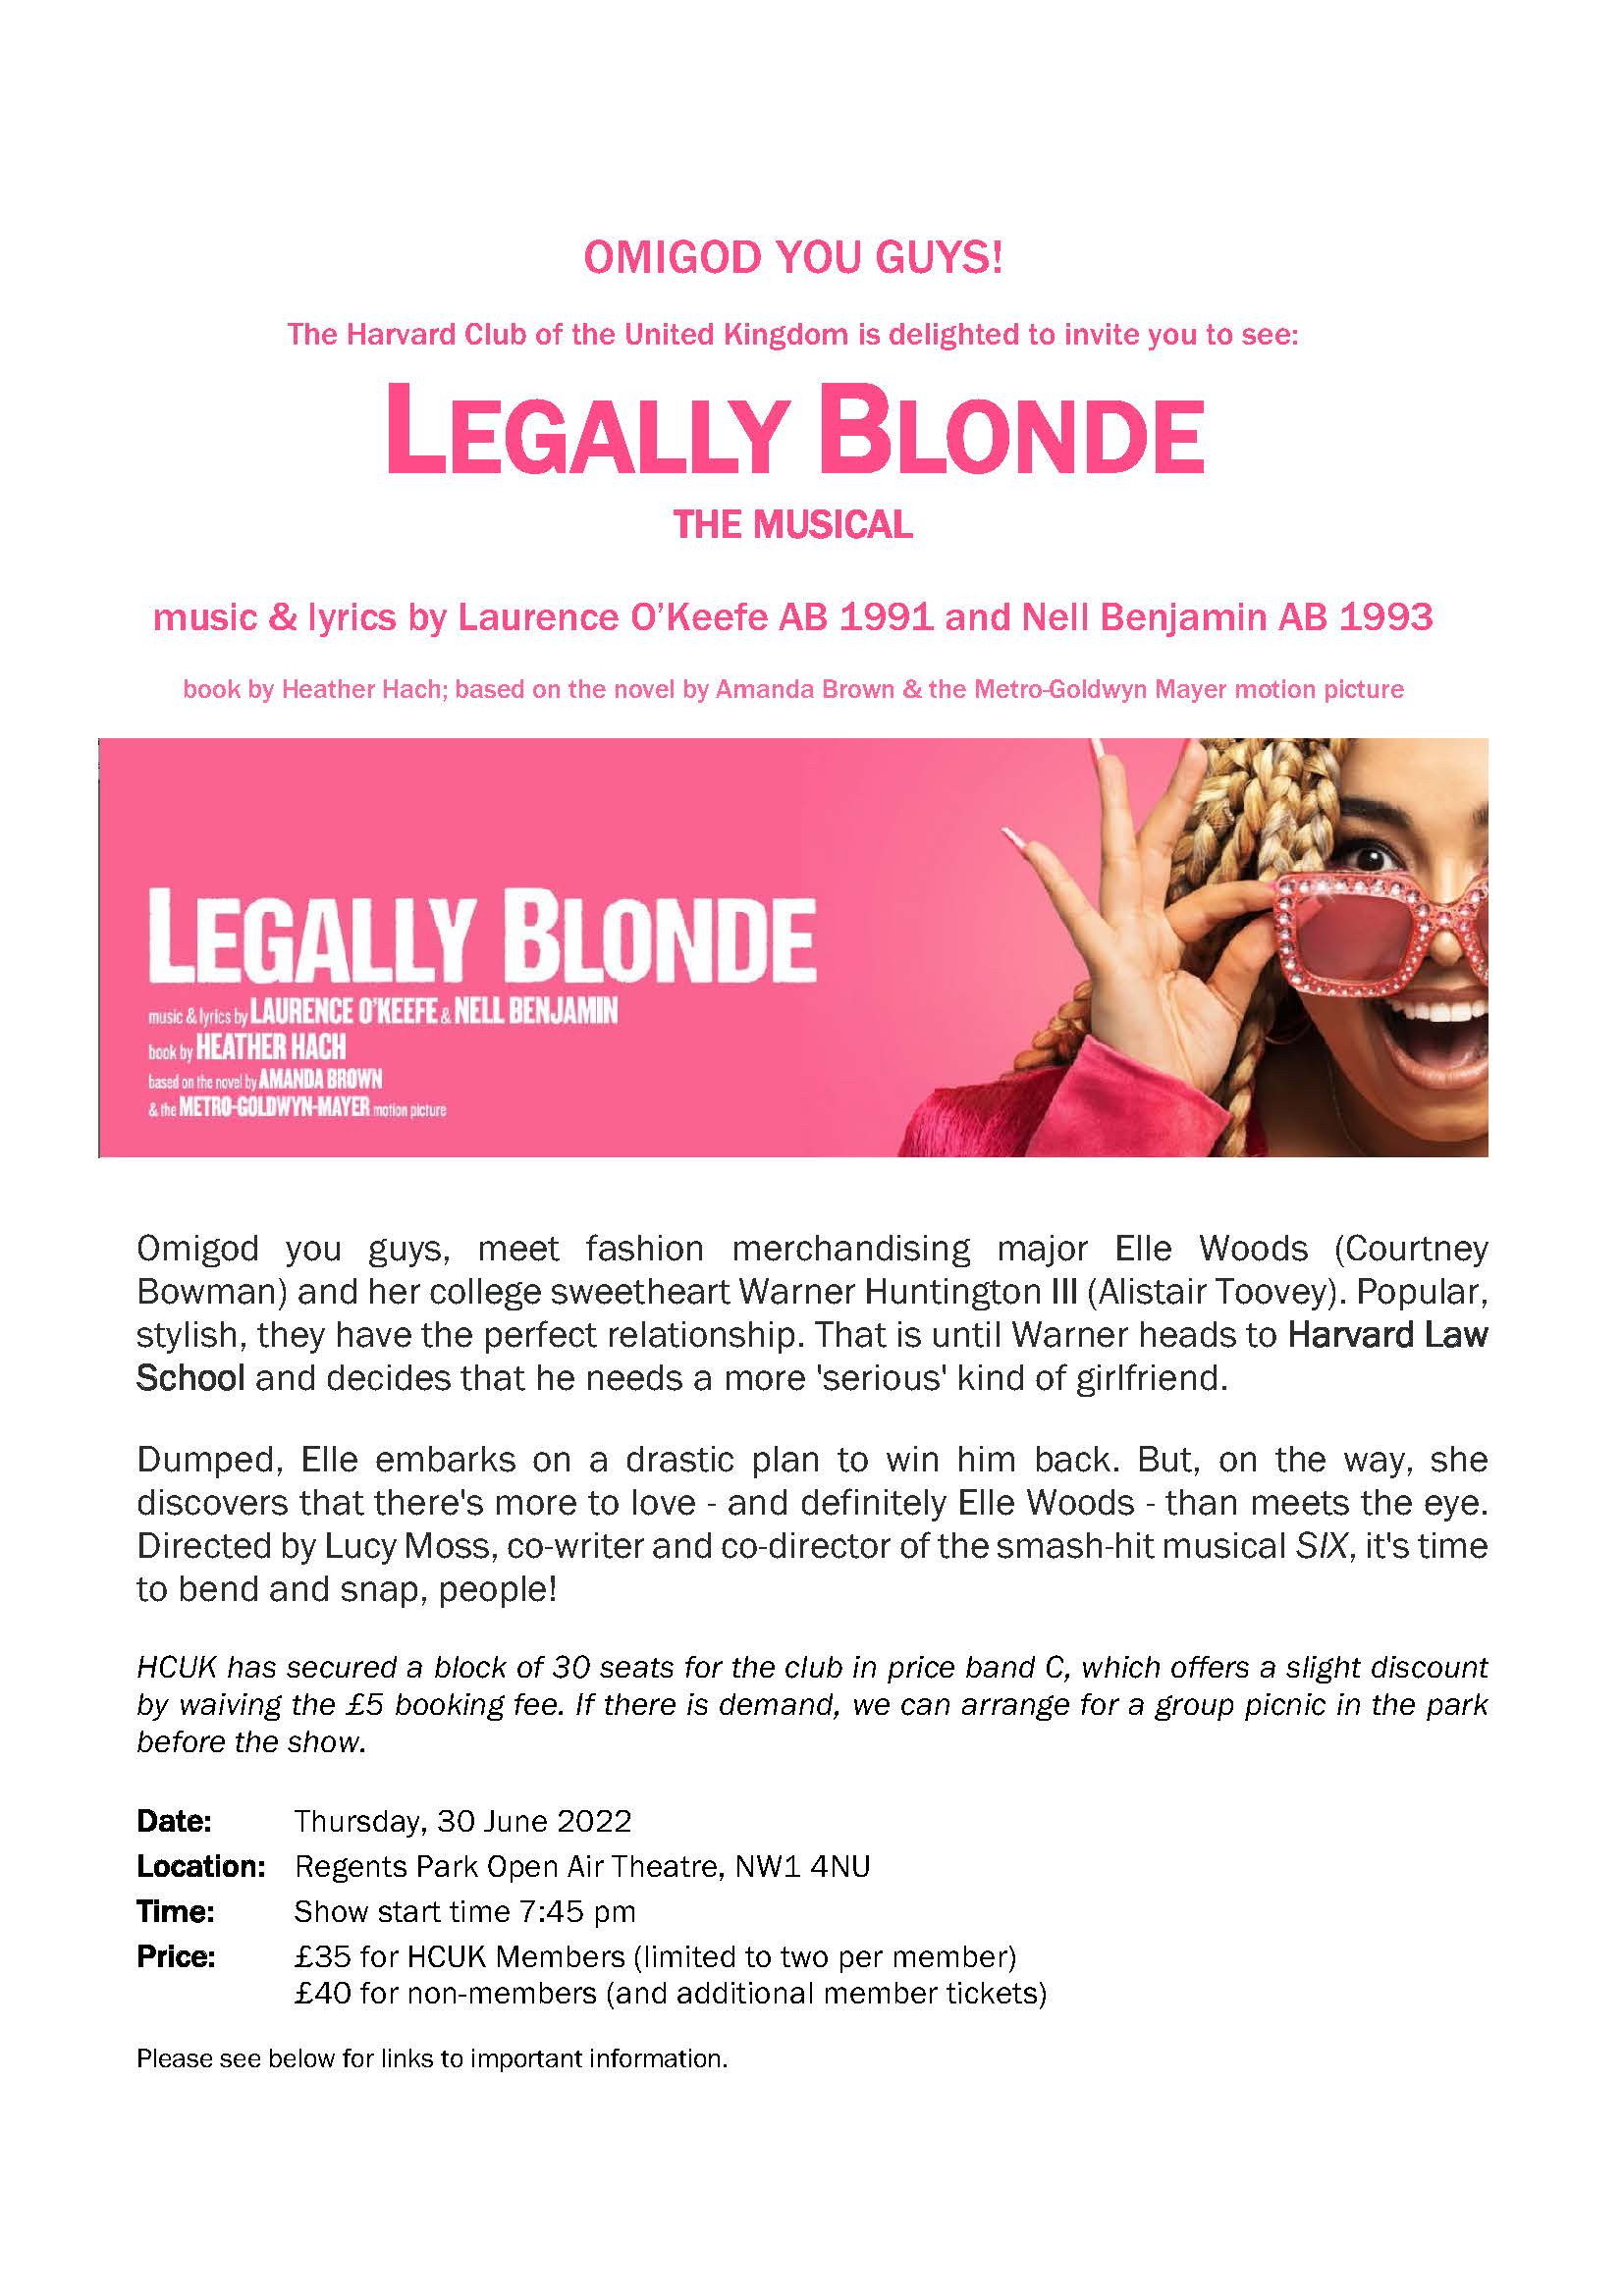 legally-blonde-flyer-hcuk-june-2022-v2